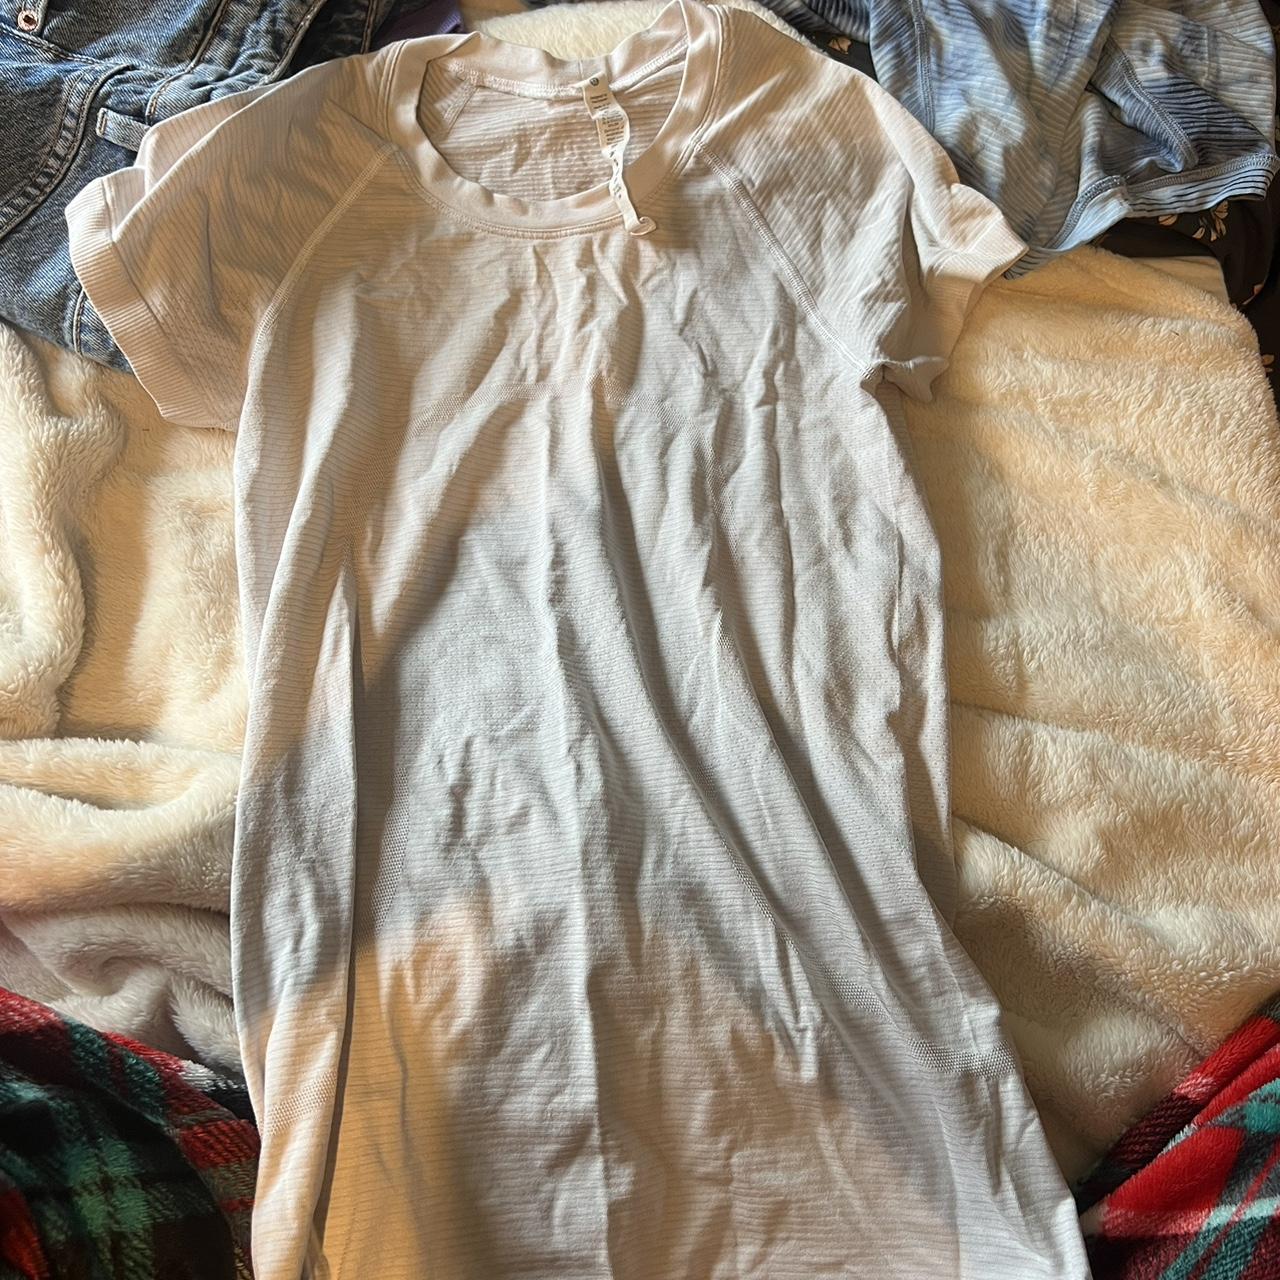 Lululemon Women's White and Grey Shirt (4)